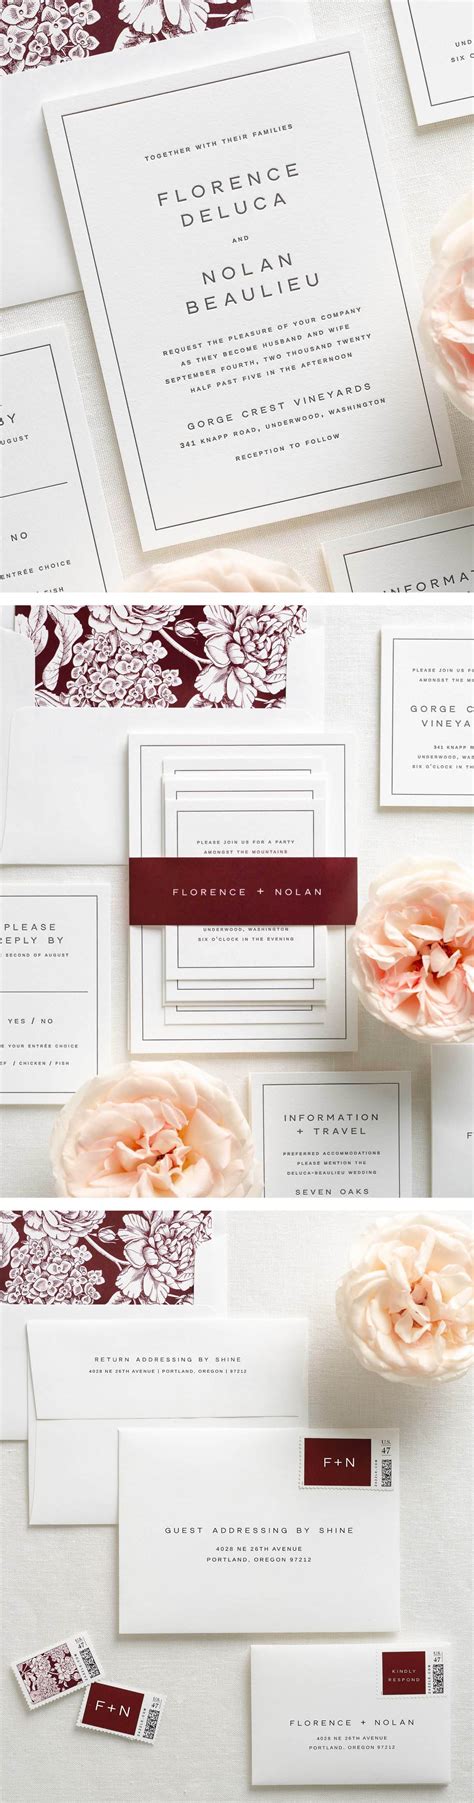 Florence Letterpress Wedding Invitations Letterpress Wedding